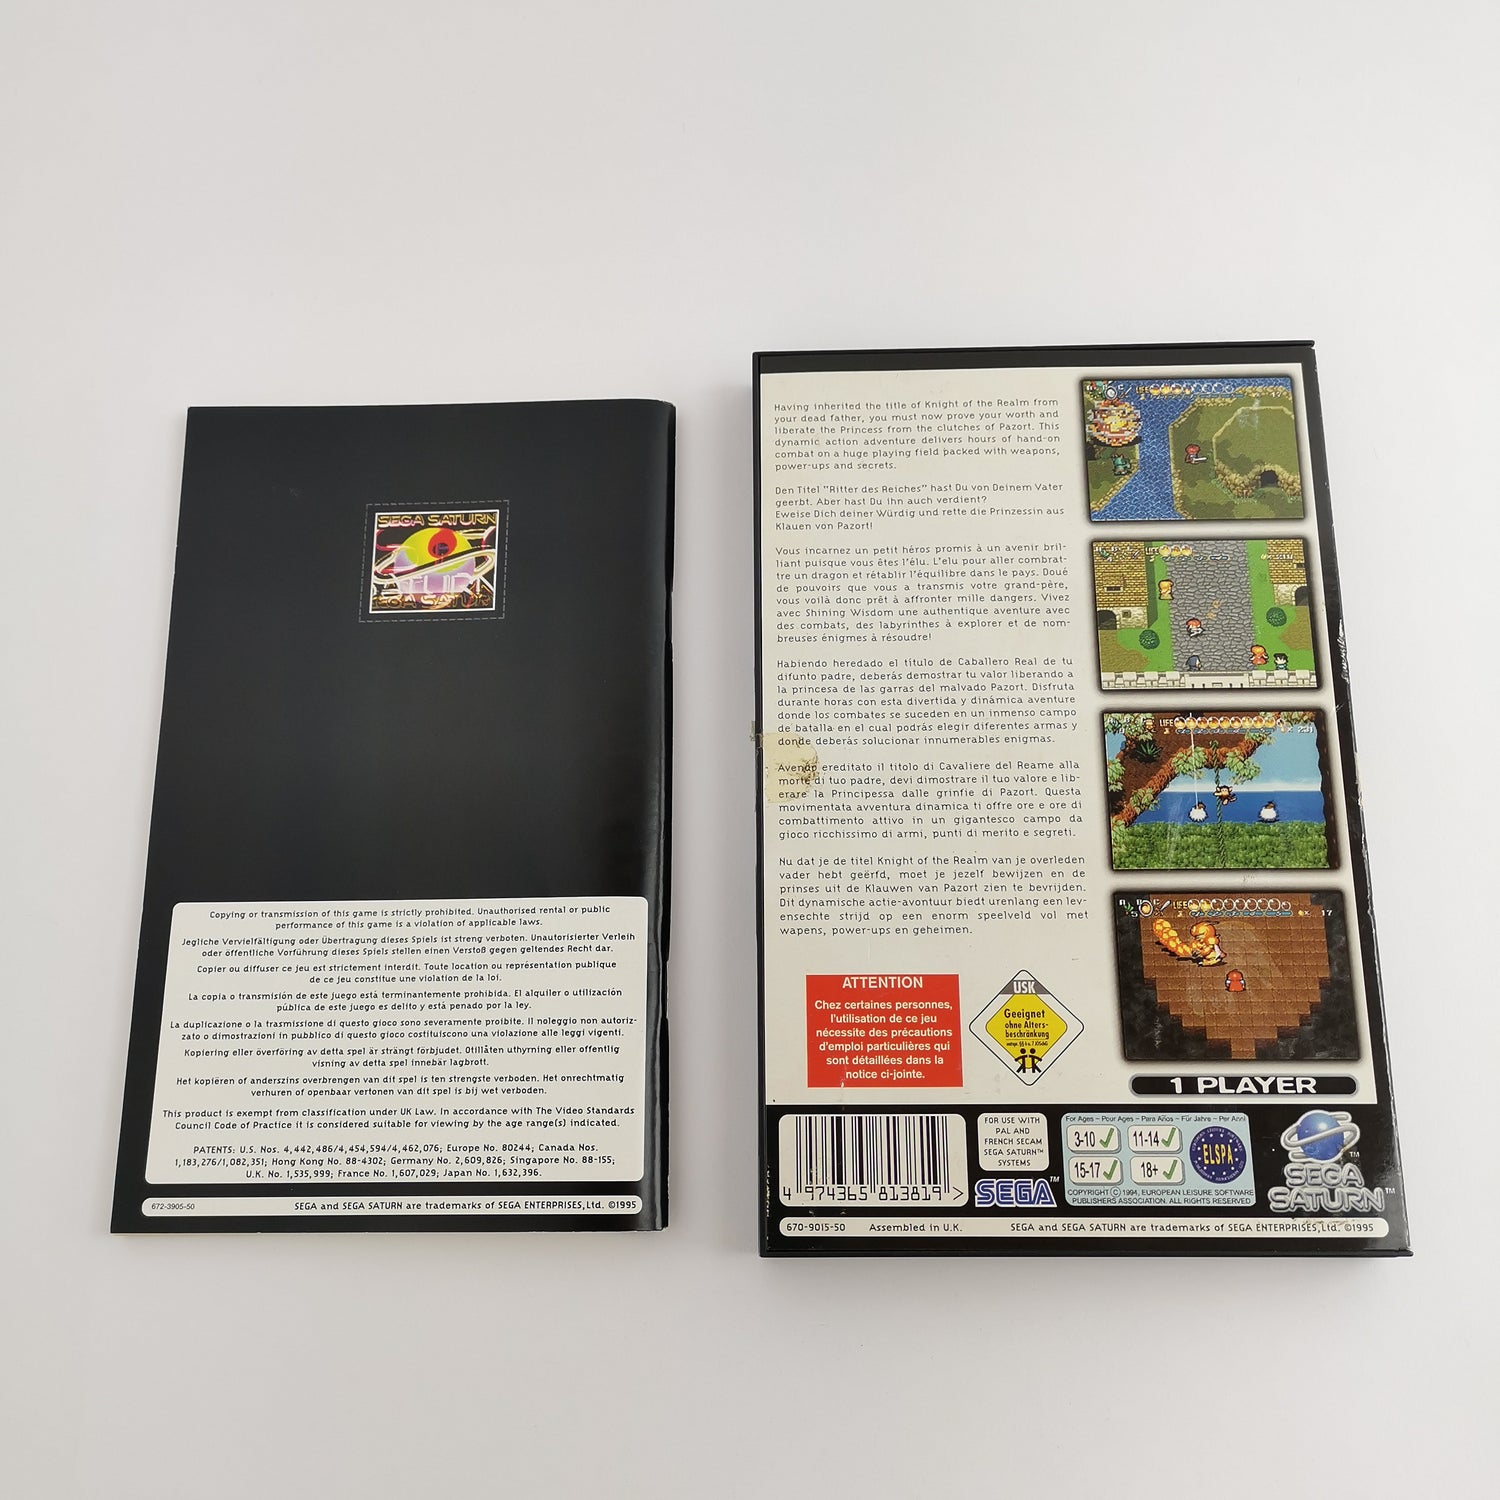 Sega Saturn Game: Shining Wisdom - Original Packaging & Instructions | PAL version